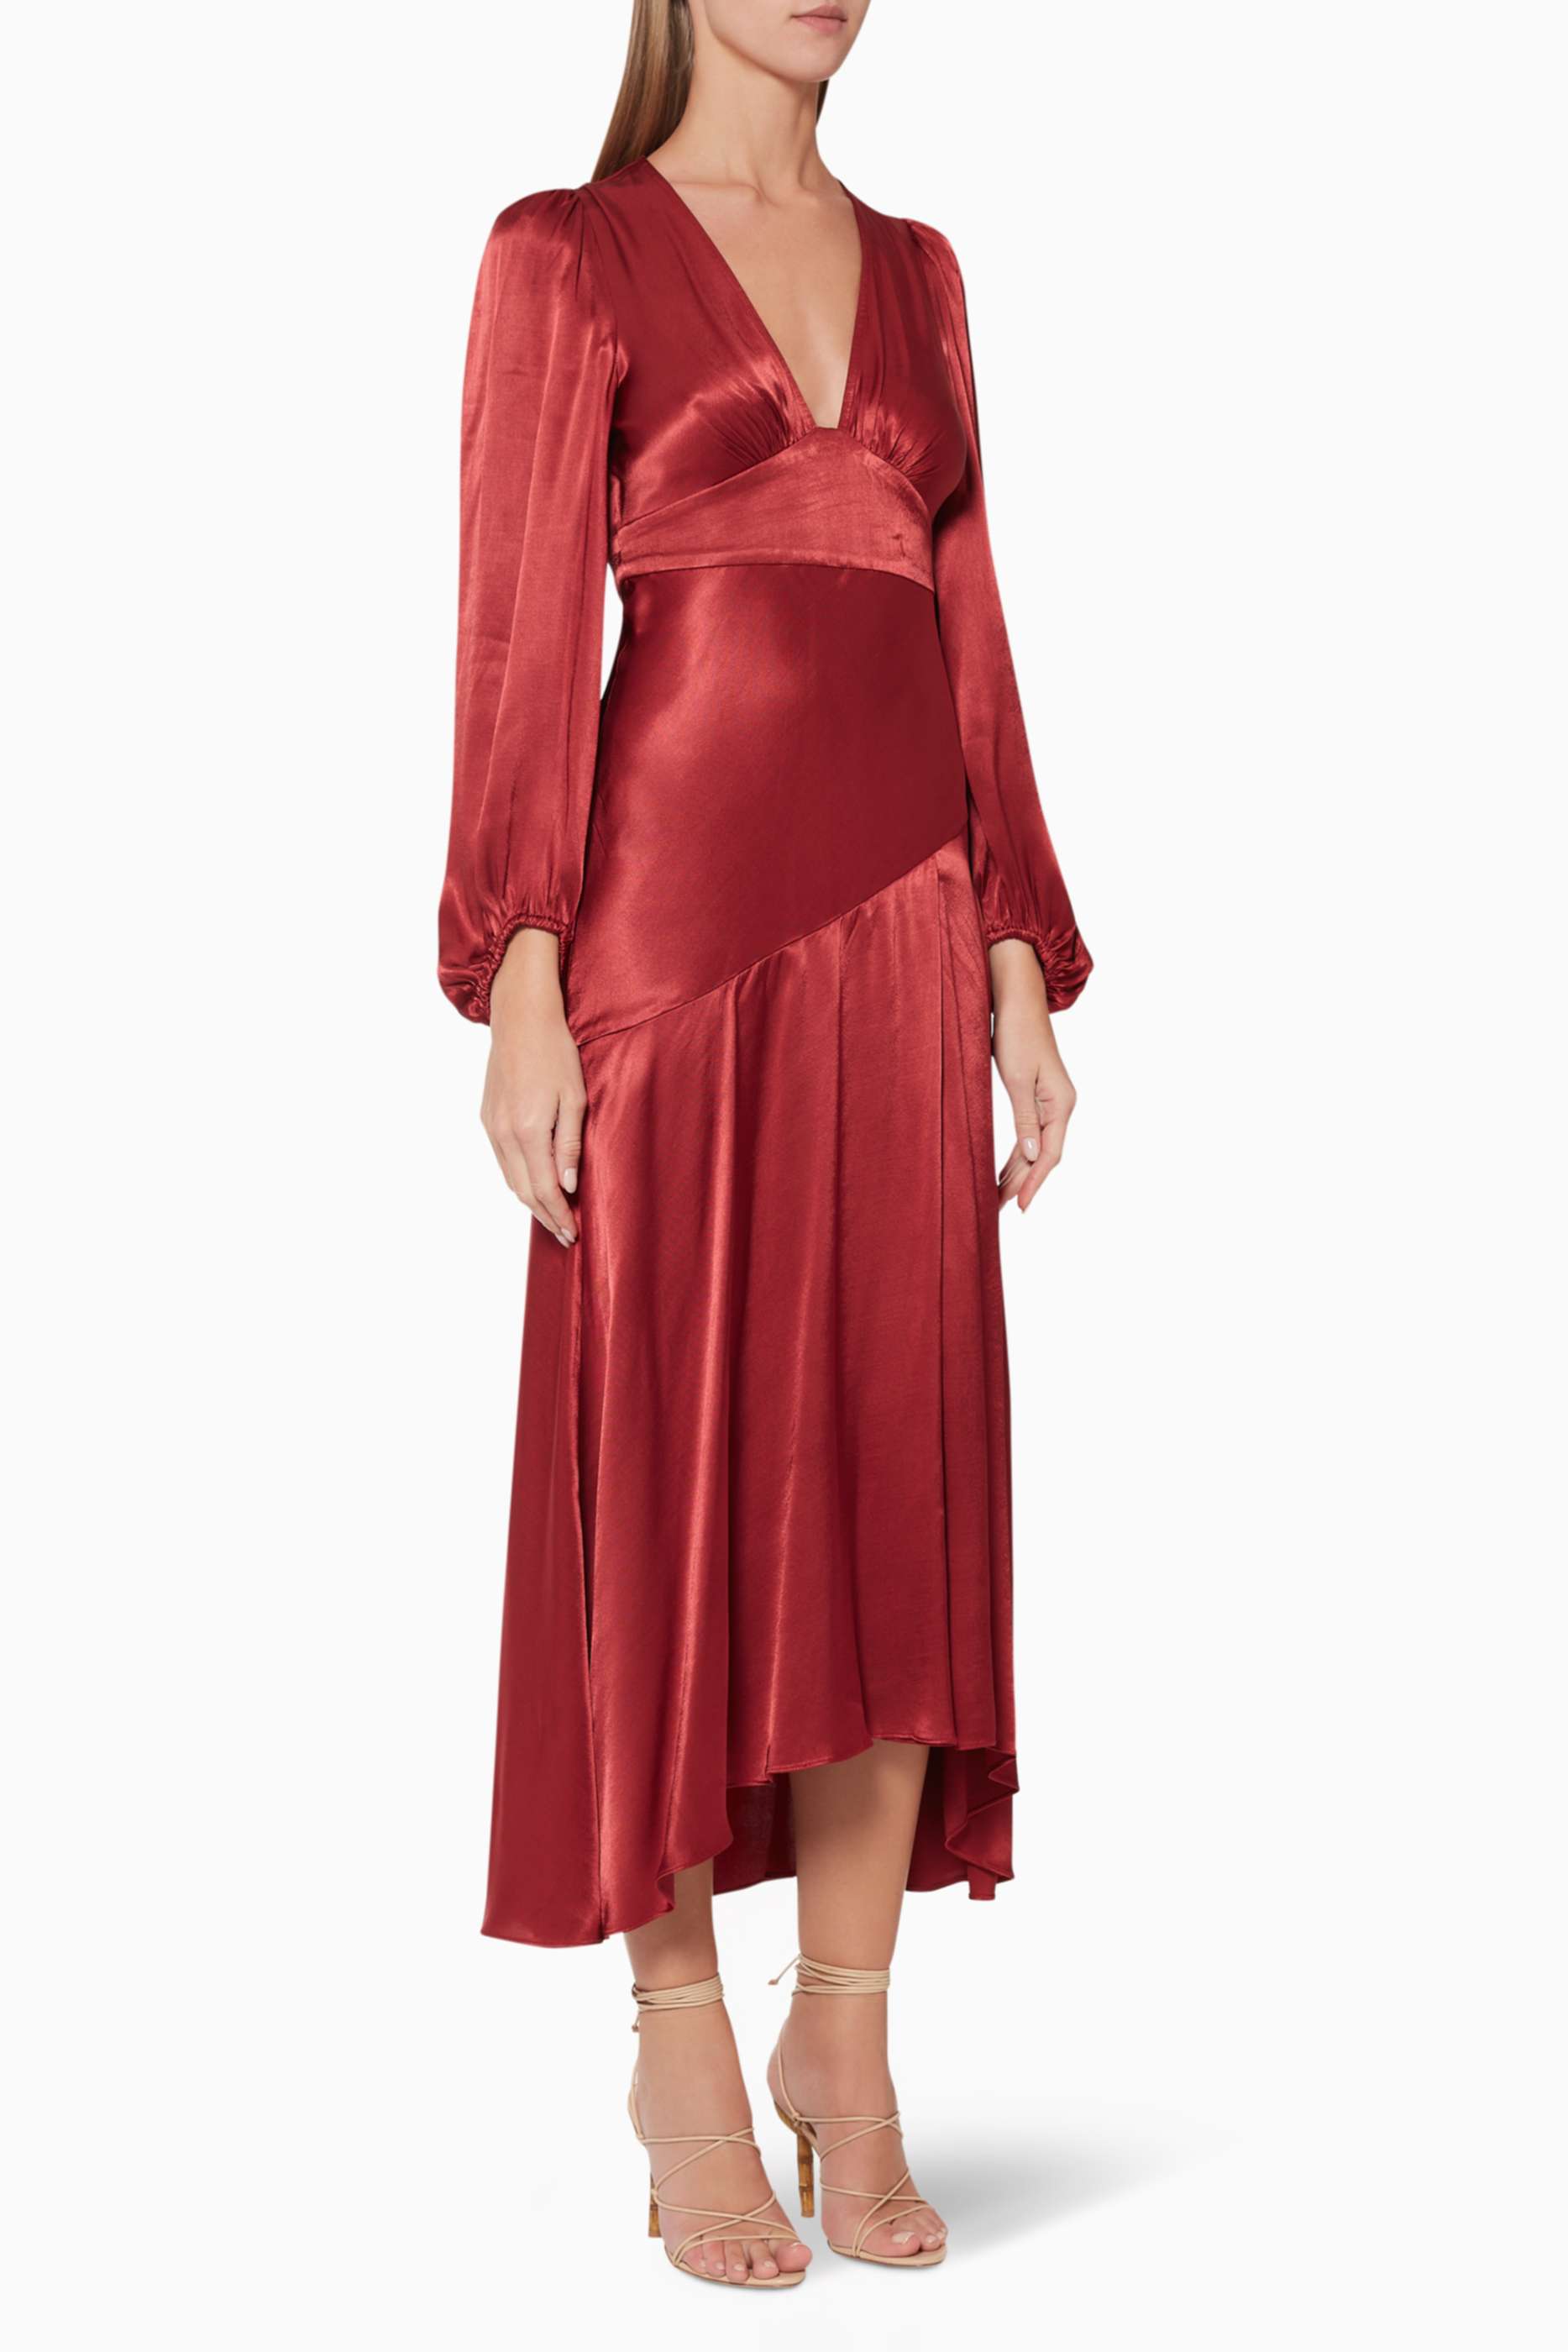 Shop SHONA JOY Red Joan Midi Dress for ...